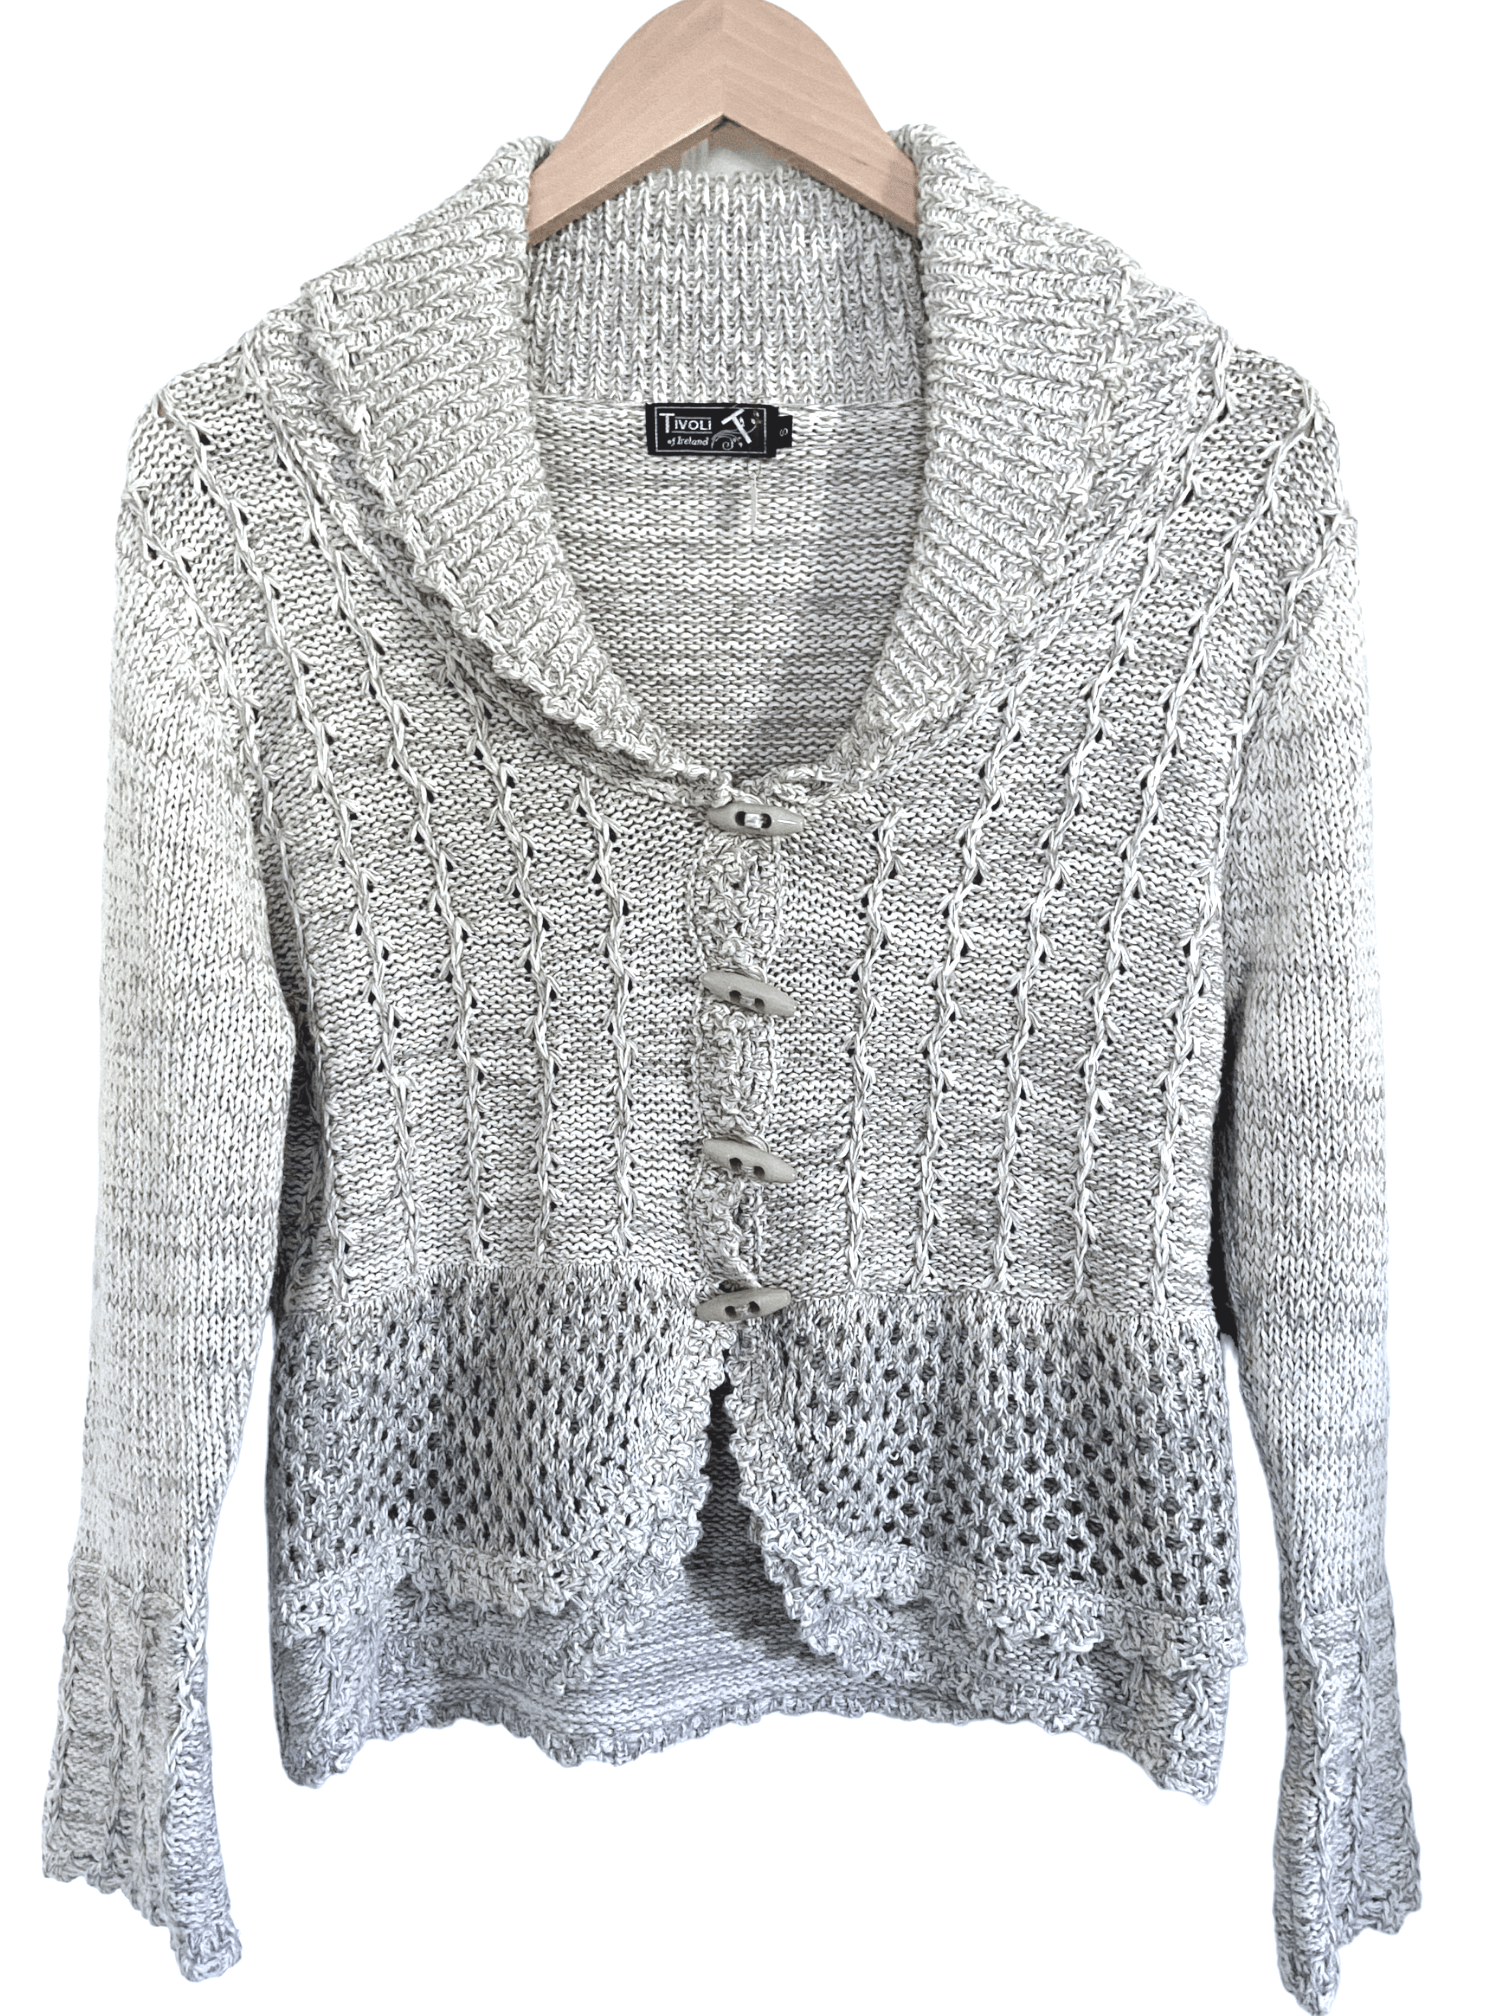 Cool Winter gray marl TIVOLI IRELAND contrast knit sweater jacket